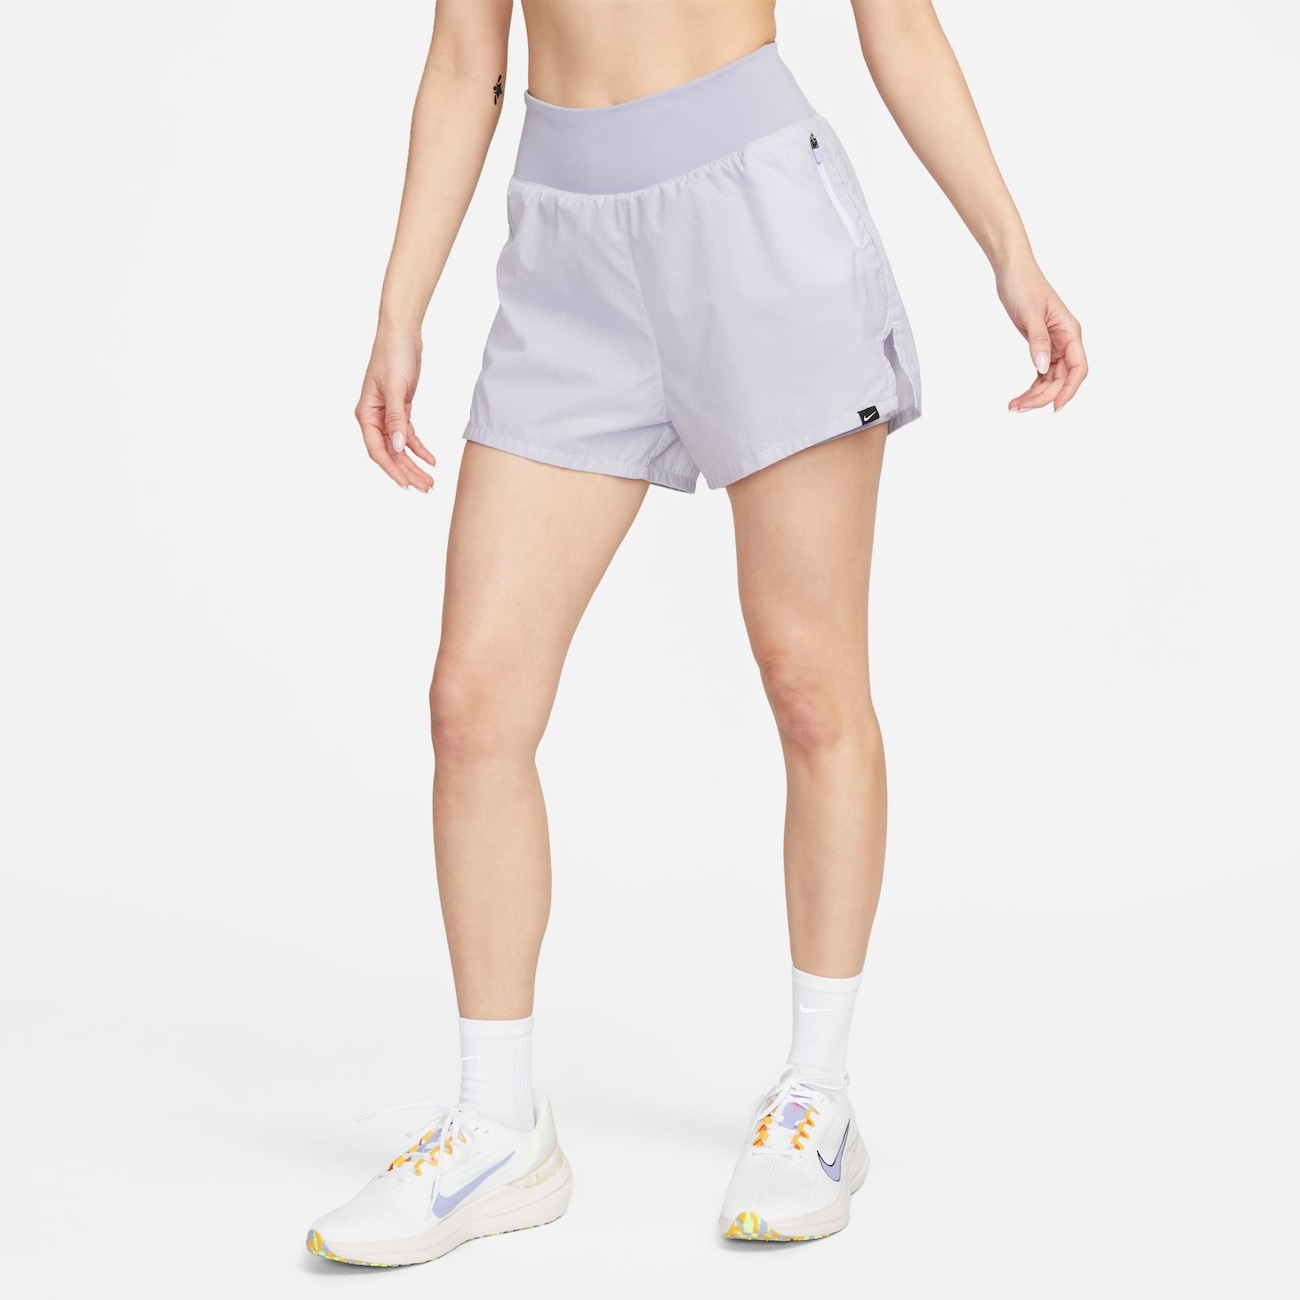 Nike Run Division Reflecterende 2-in-1-shorts met halfhoge taille voor dames (8 cm) - Paars